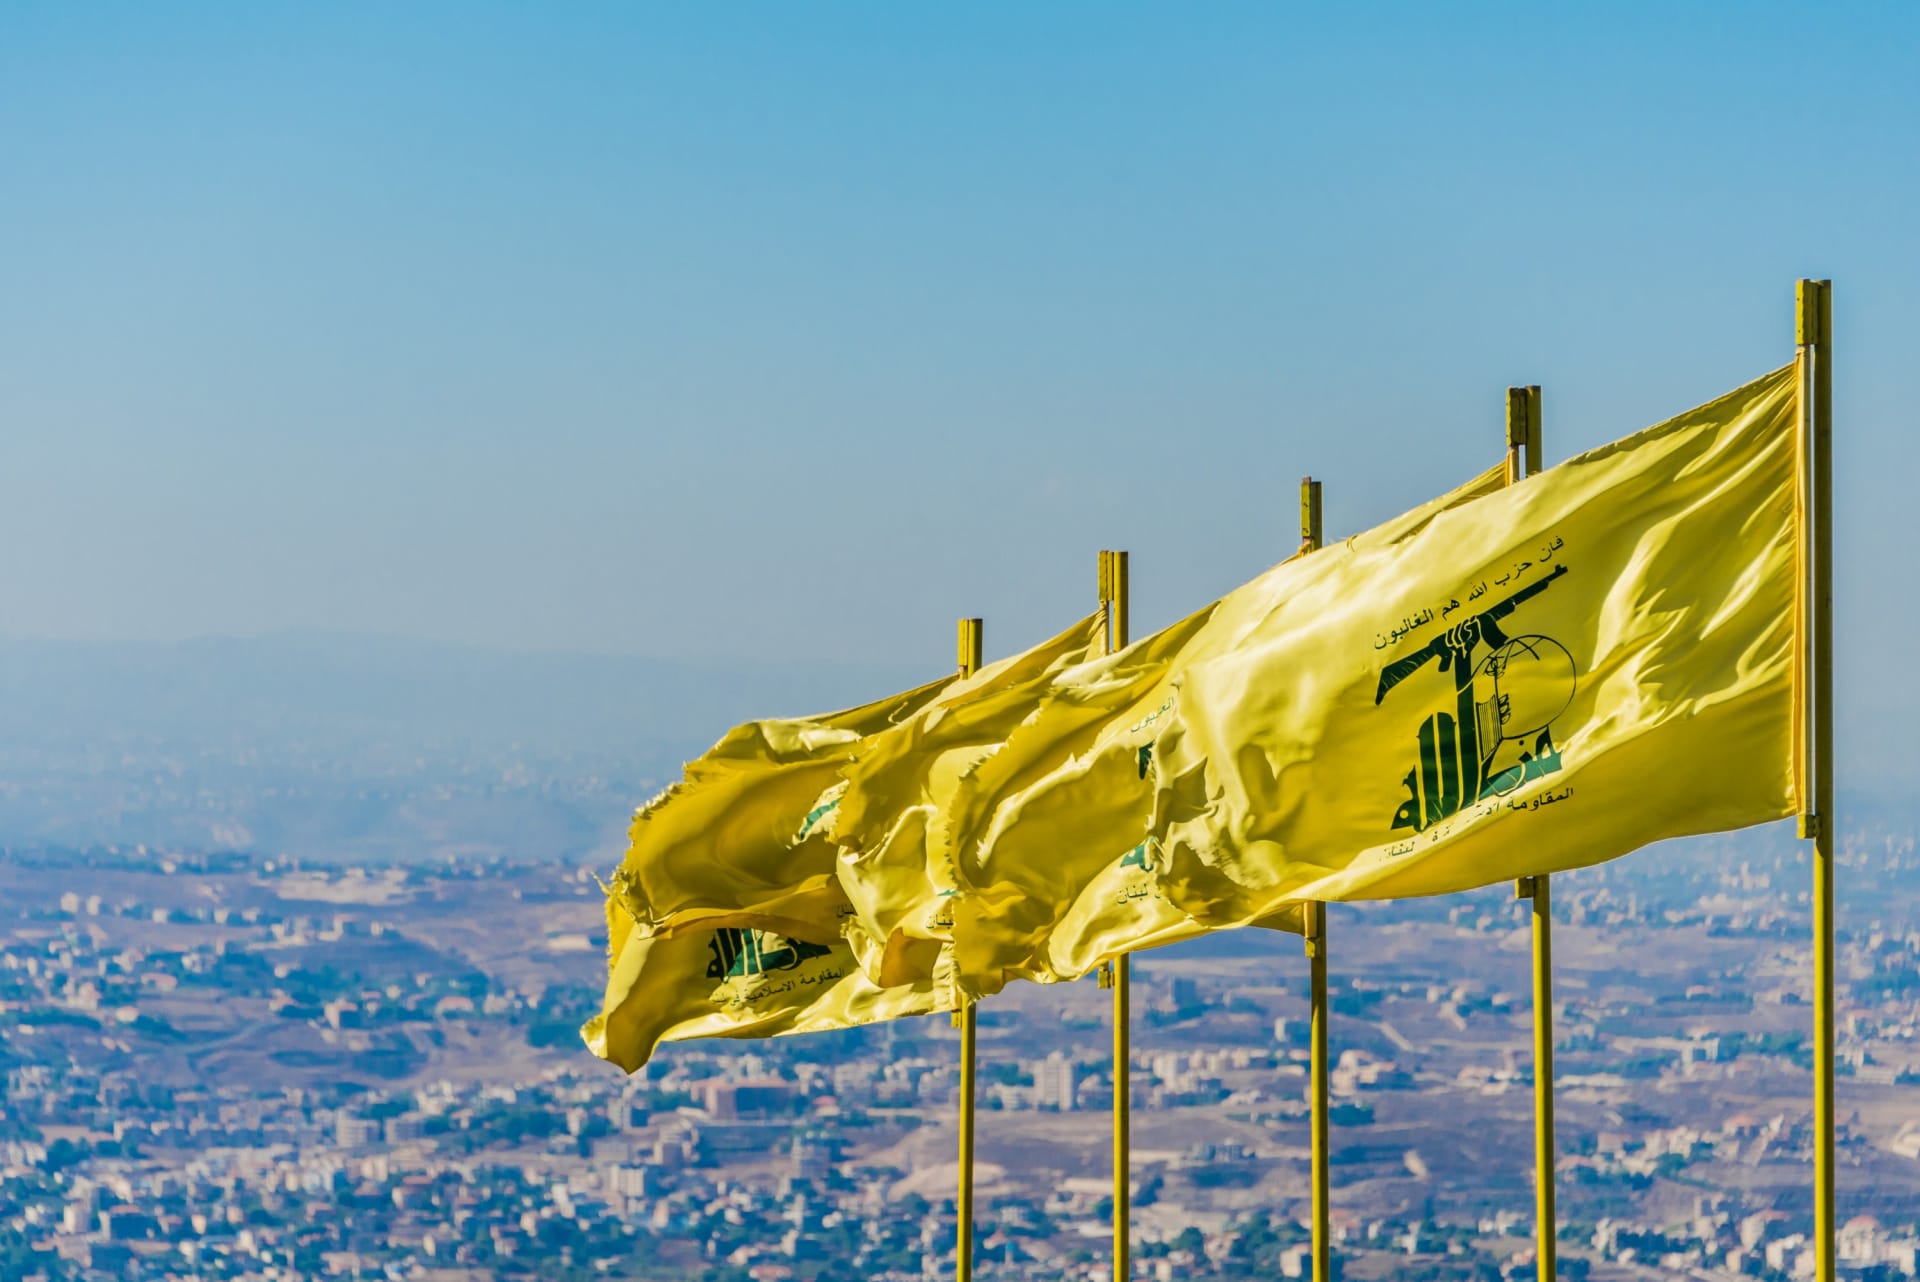 Hizballáh